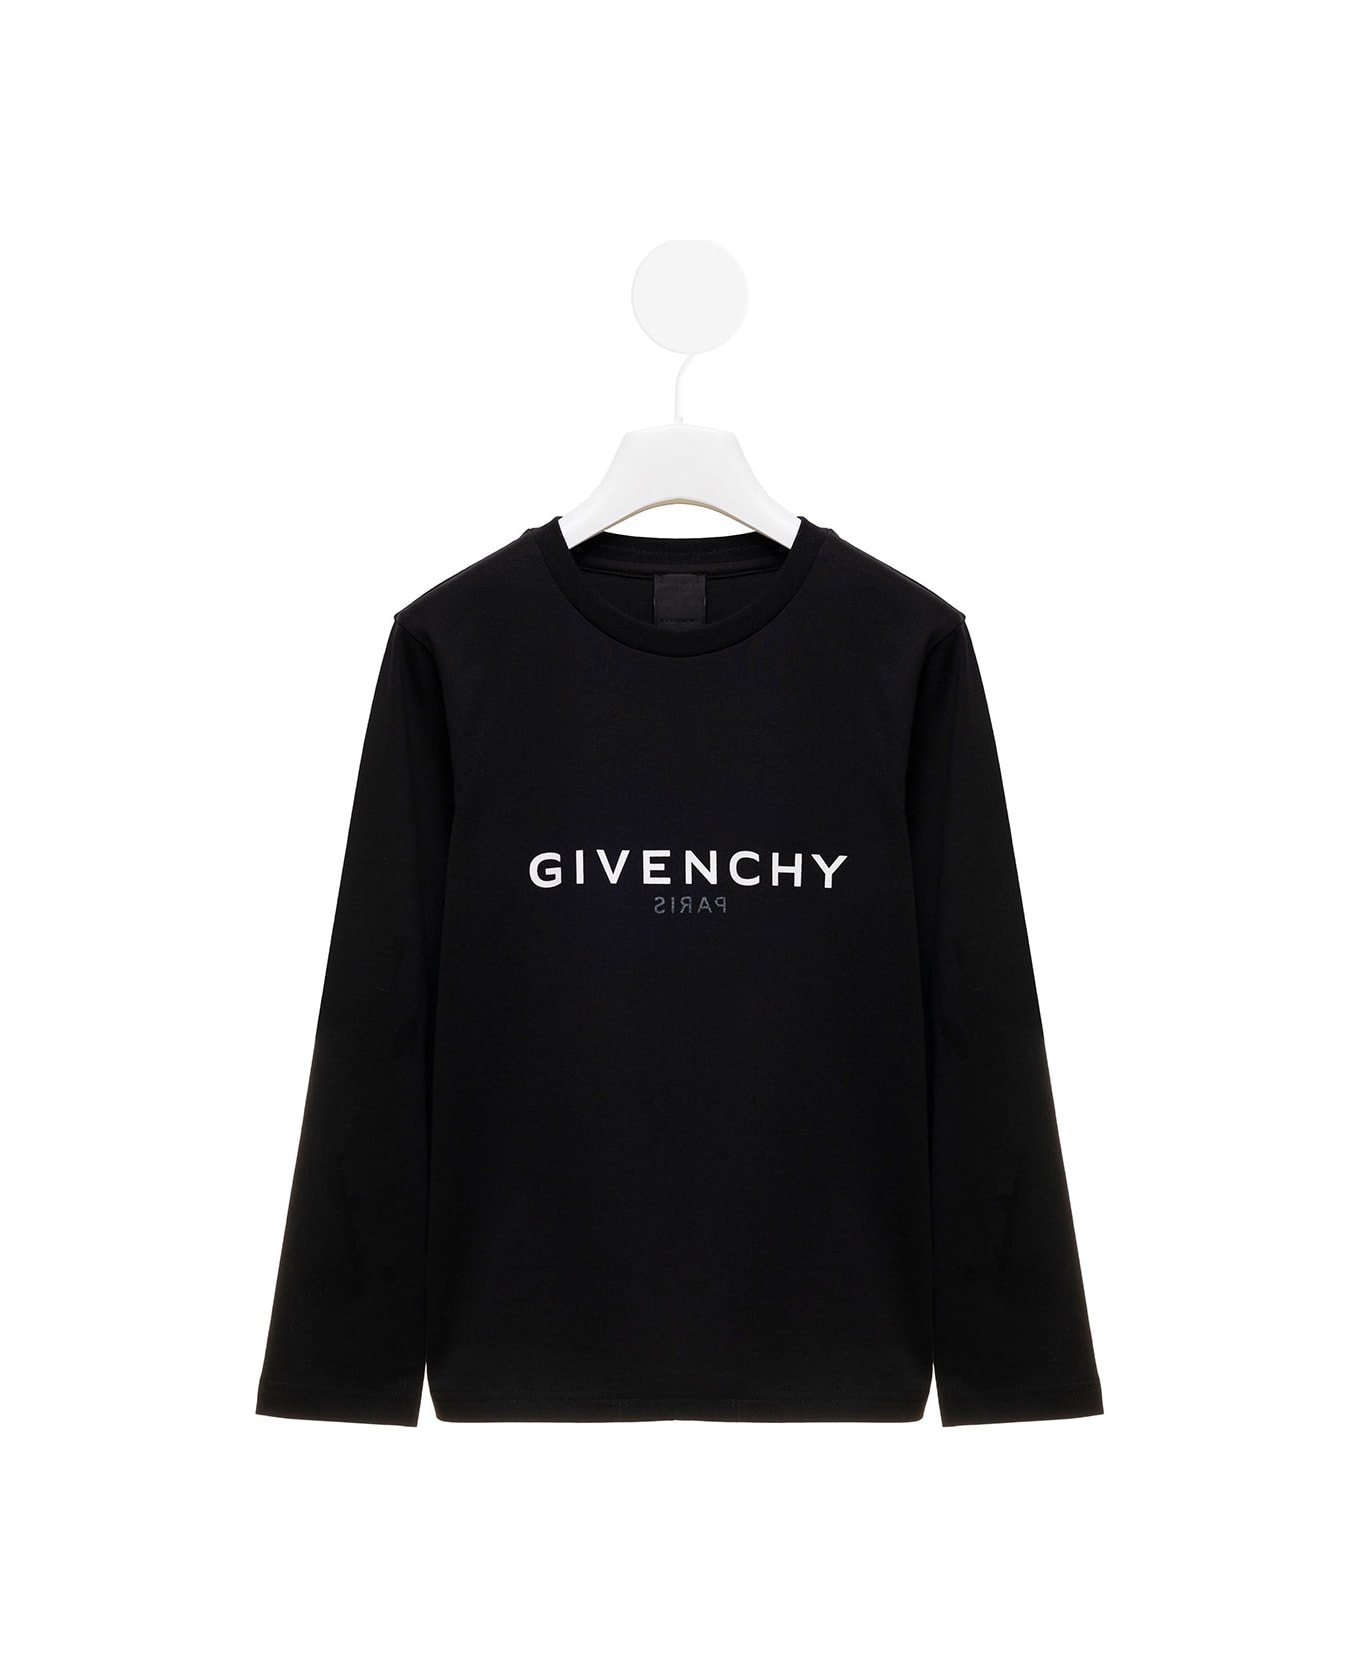 Givenchy Logo Printed Black Cotton T-shirt Boy Givenchy Kids - Black